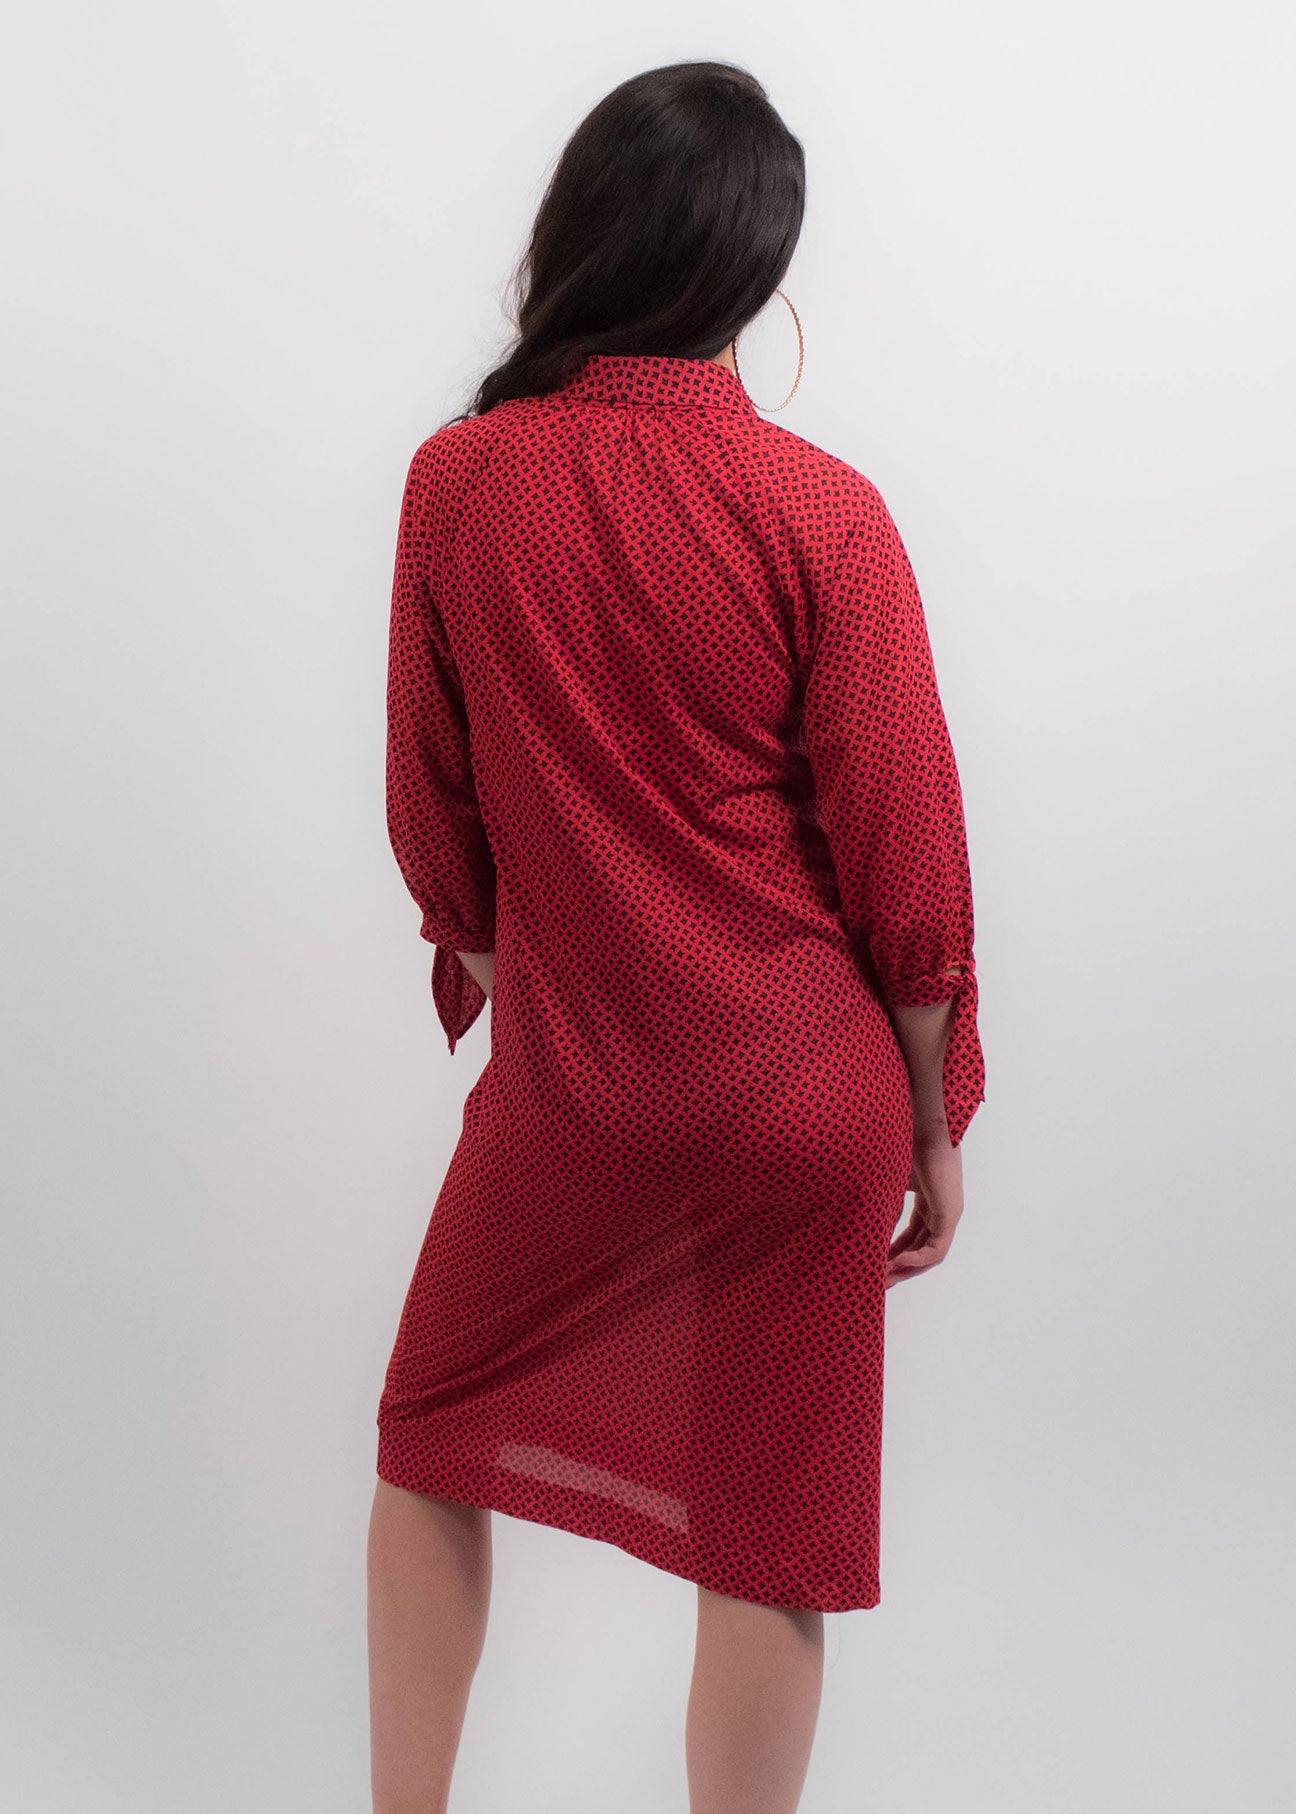 70s Geometric Abstract Dress